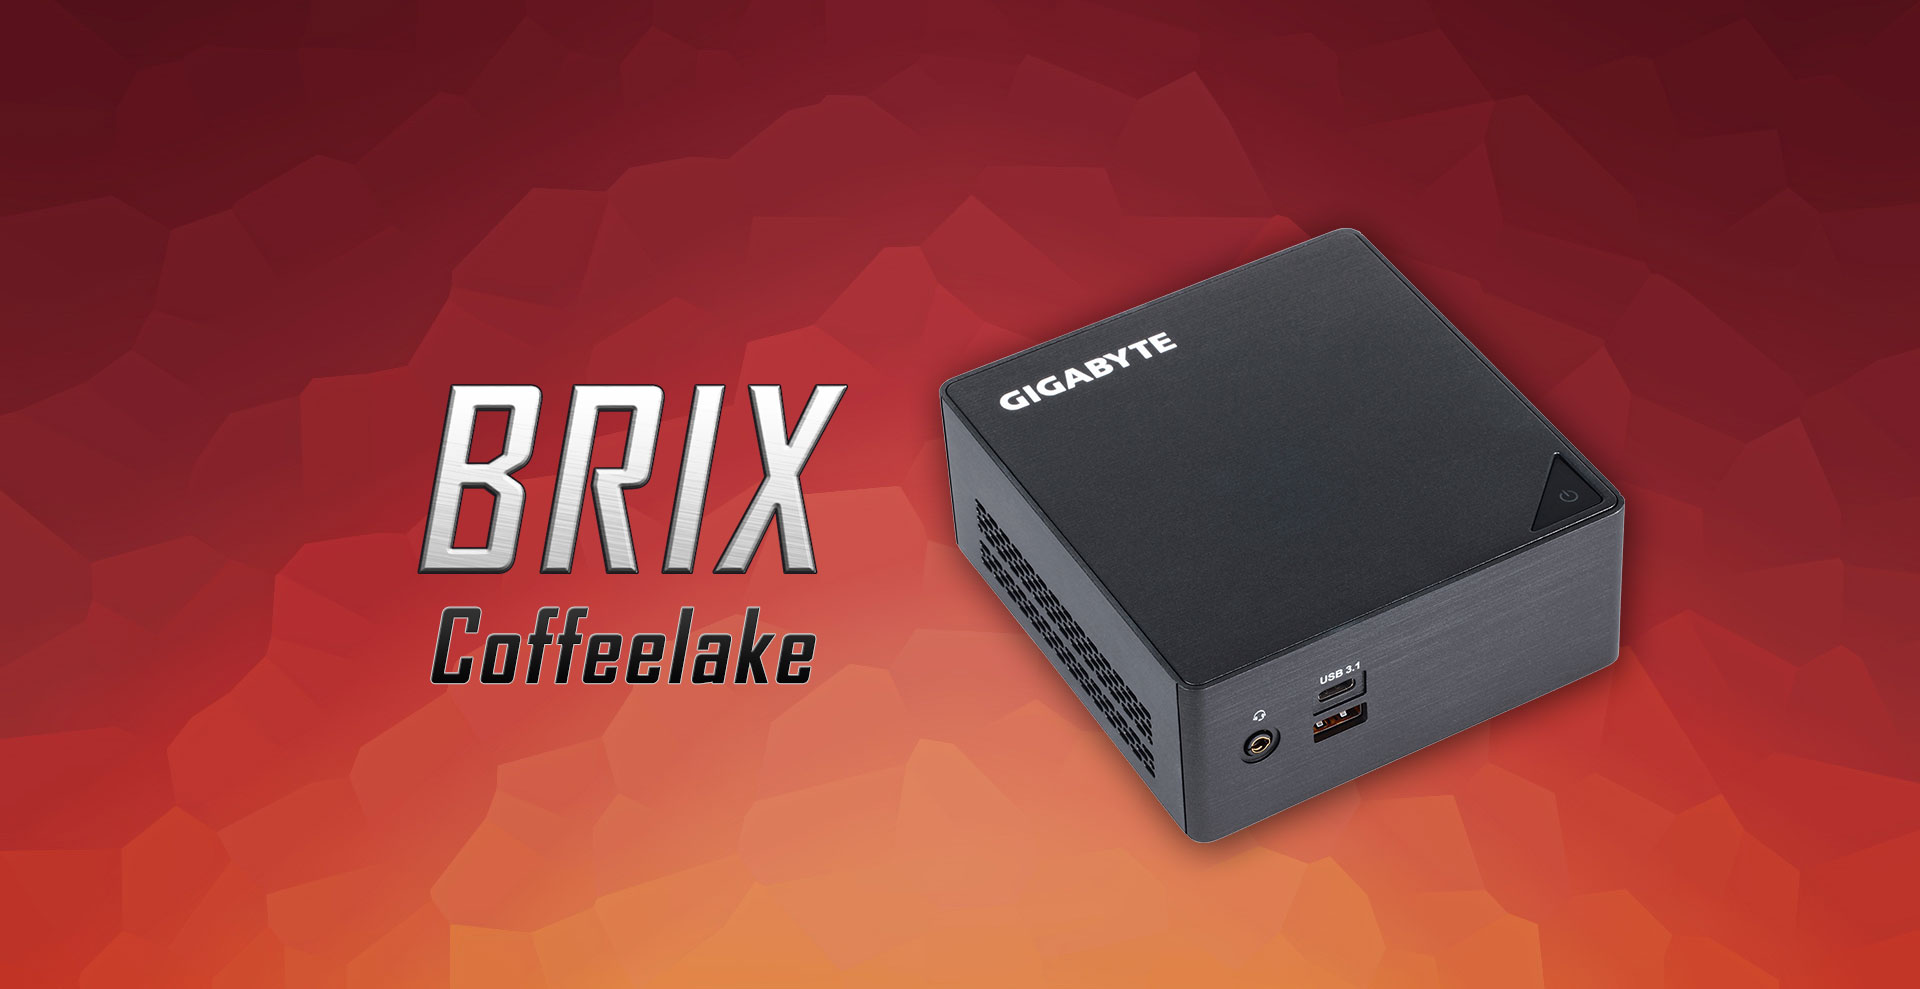 Brix Coffeelake Mini PC